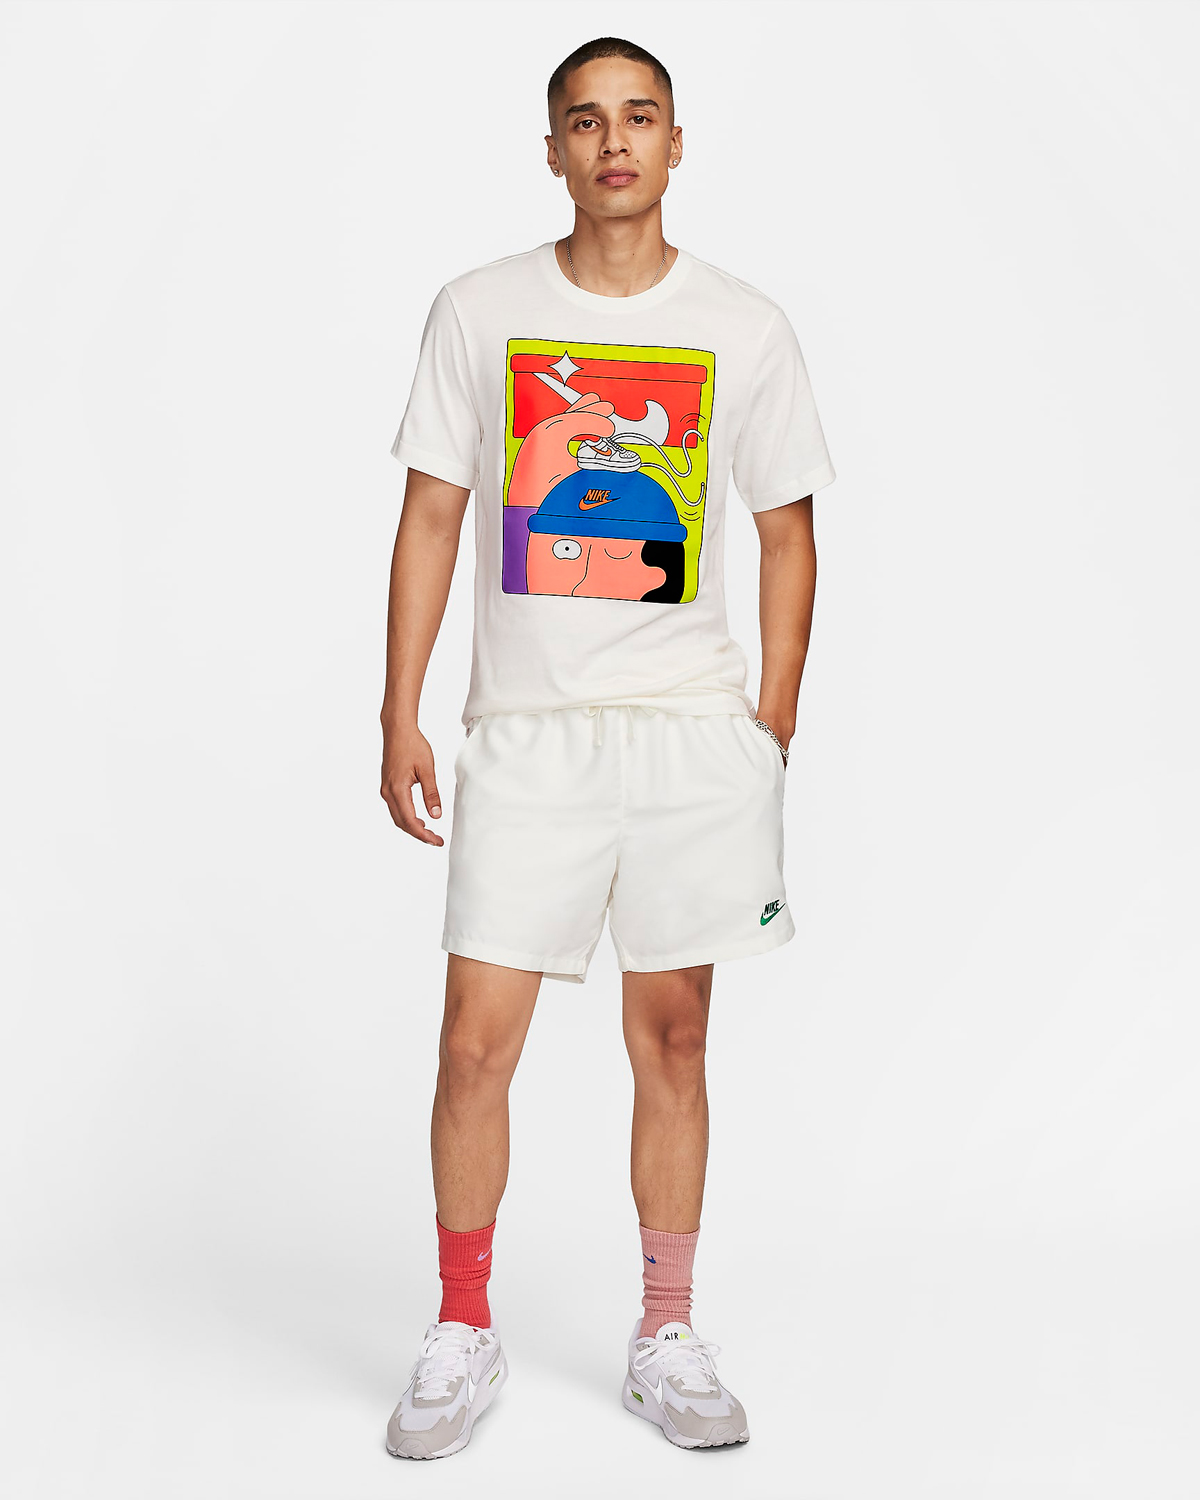 Nike-Sportswear-Graphic-T-Shirt-Sail